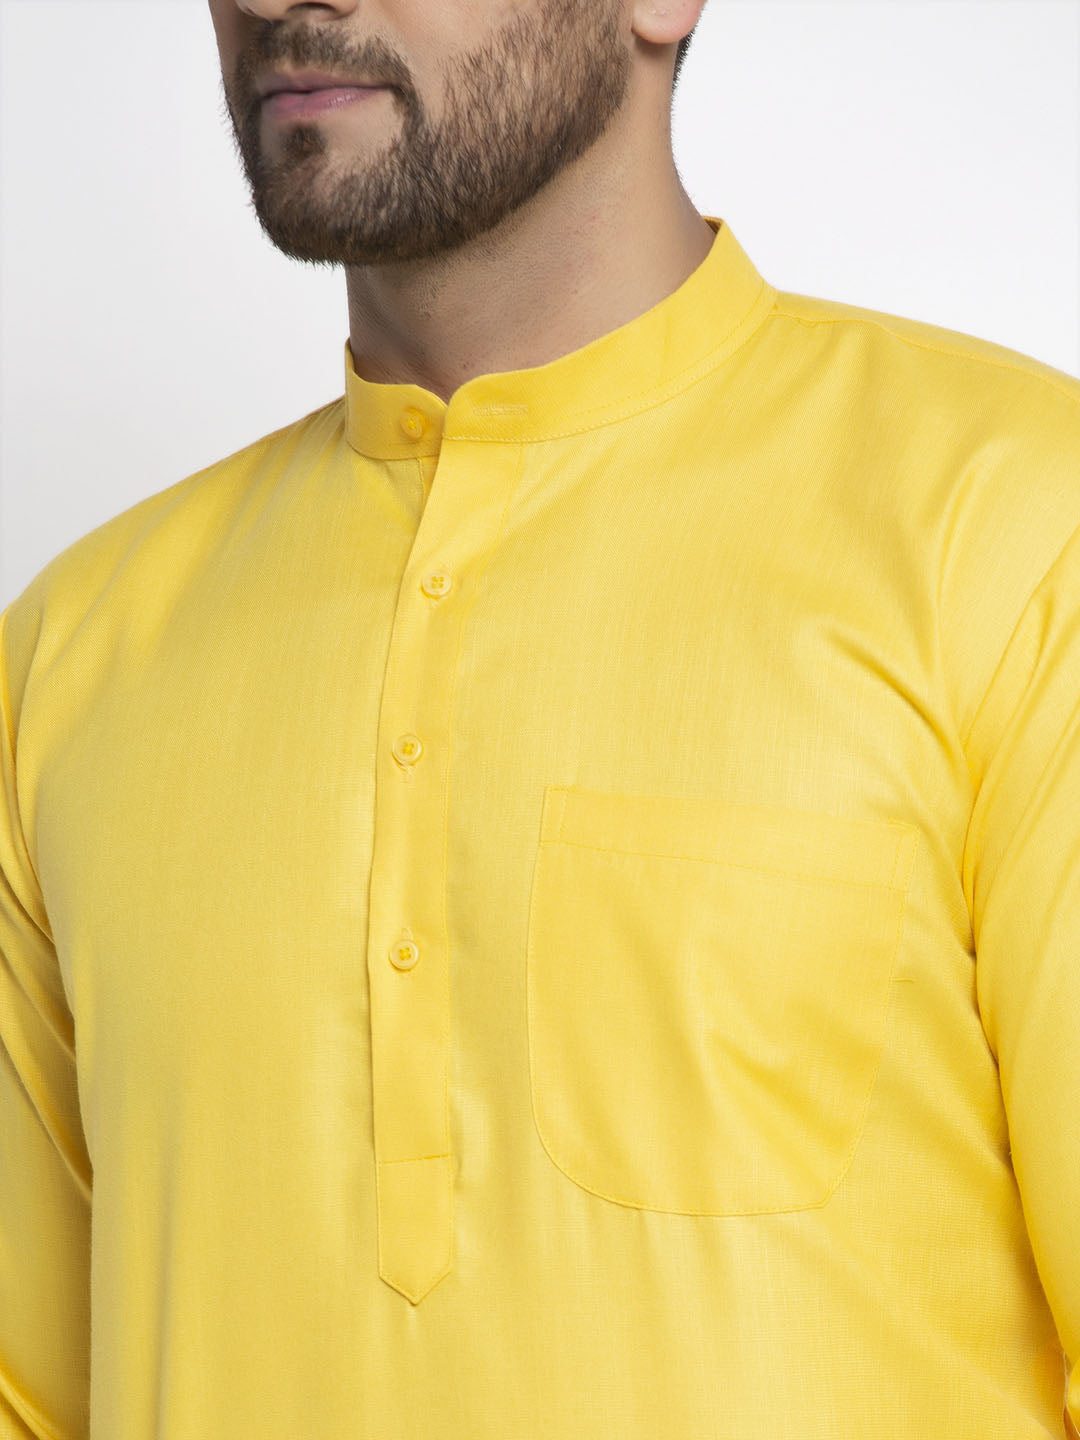 Jompers Men's Lemon Cotton Solid Kurta Payjama Sets